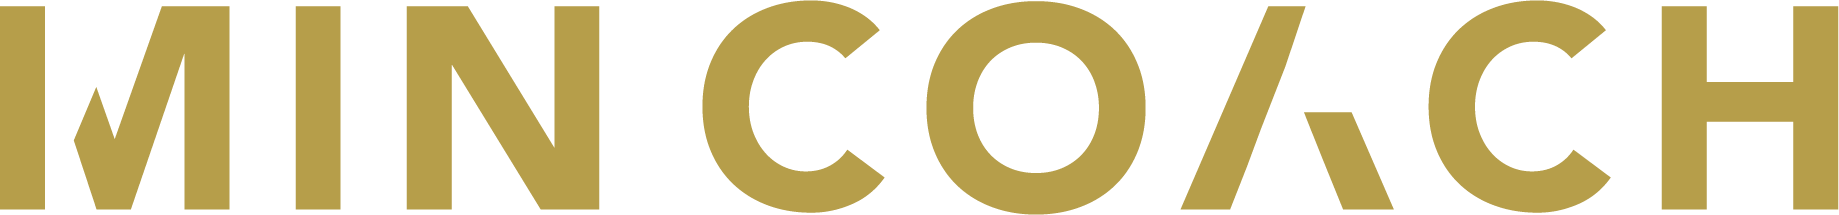 MIN COACH logo